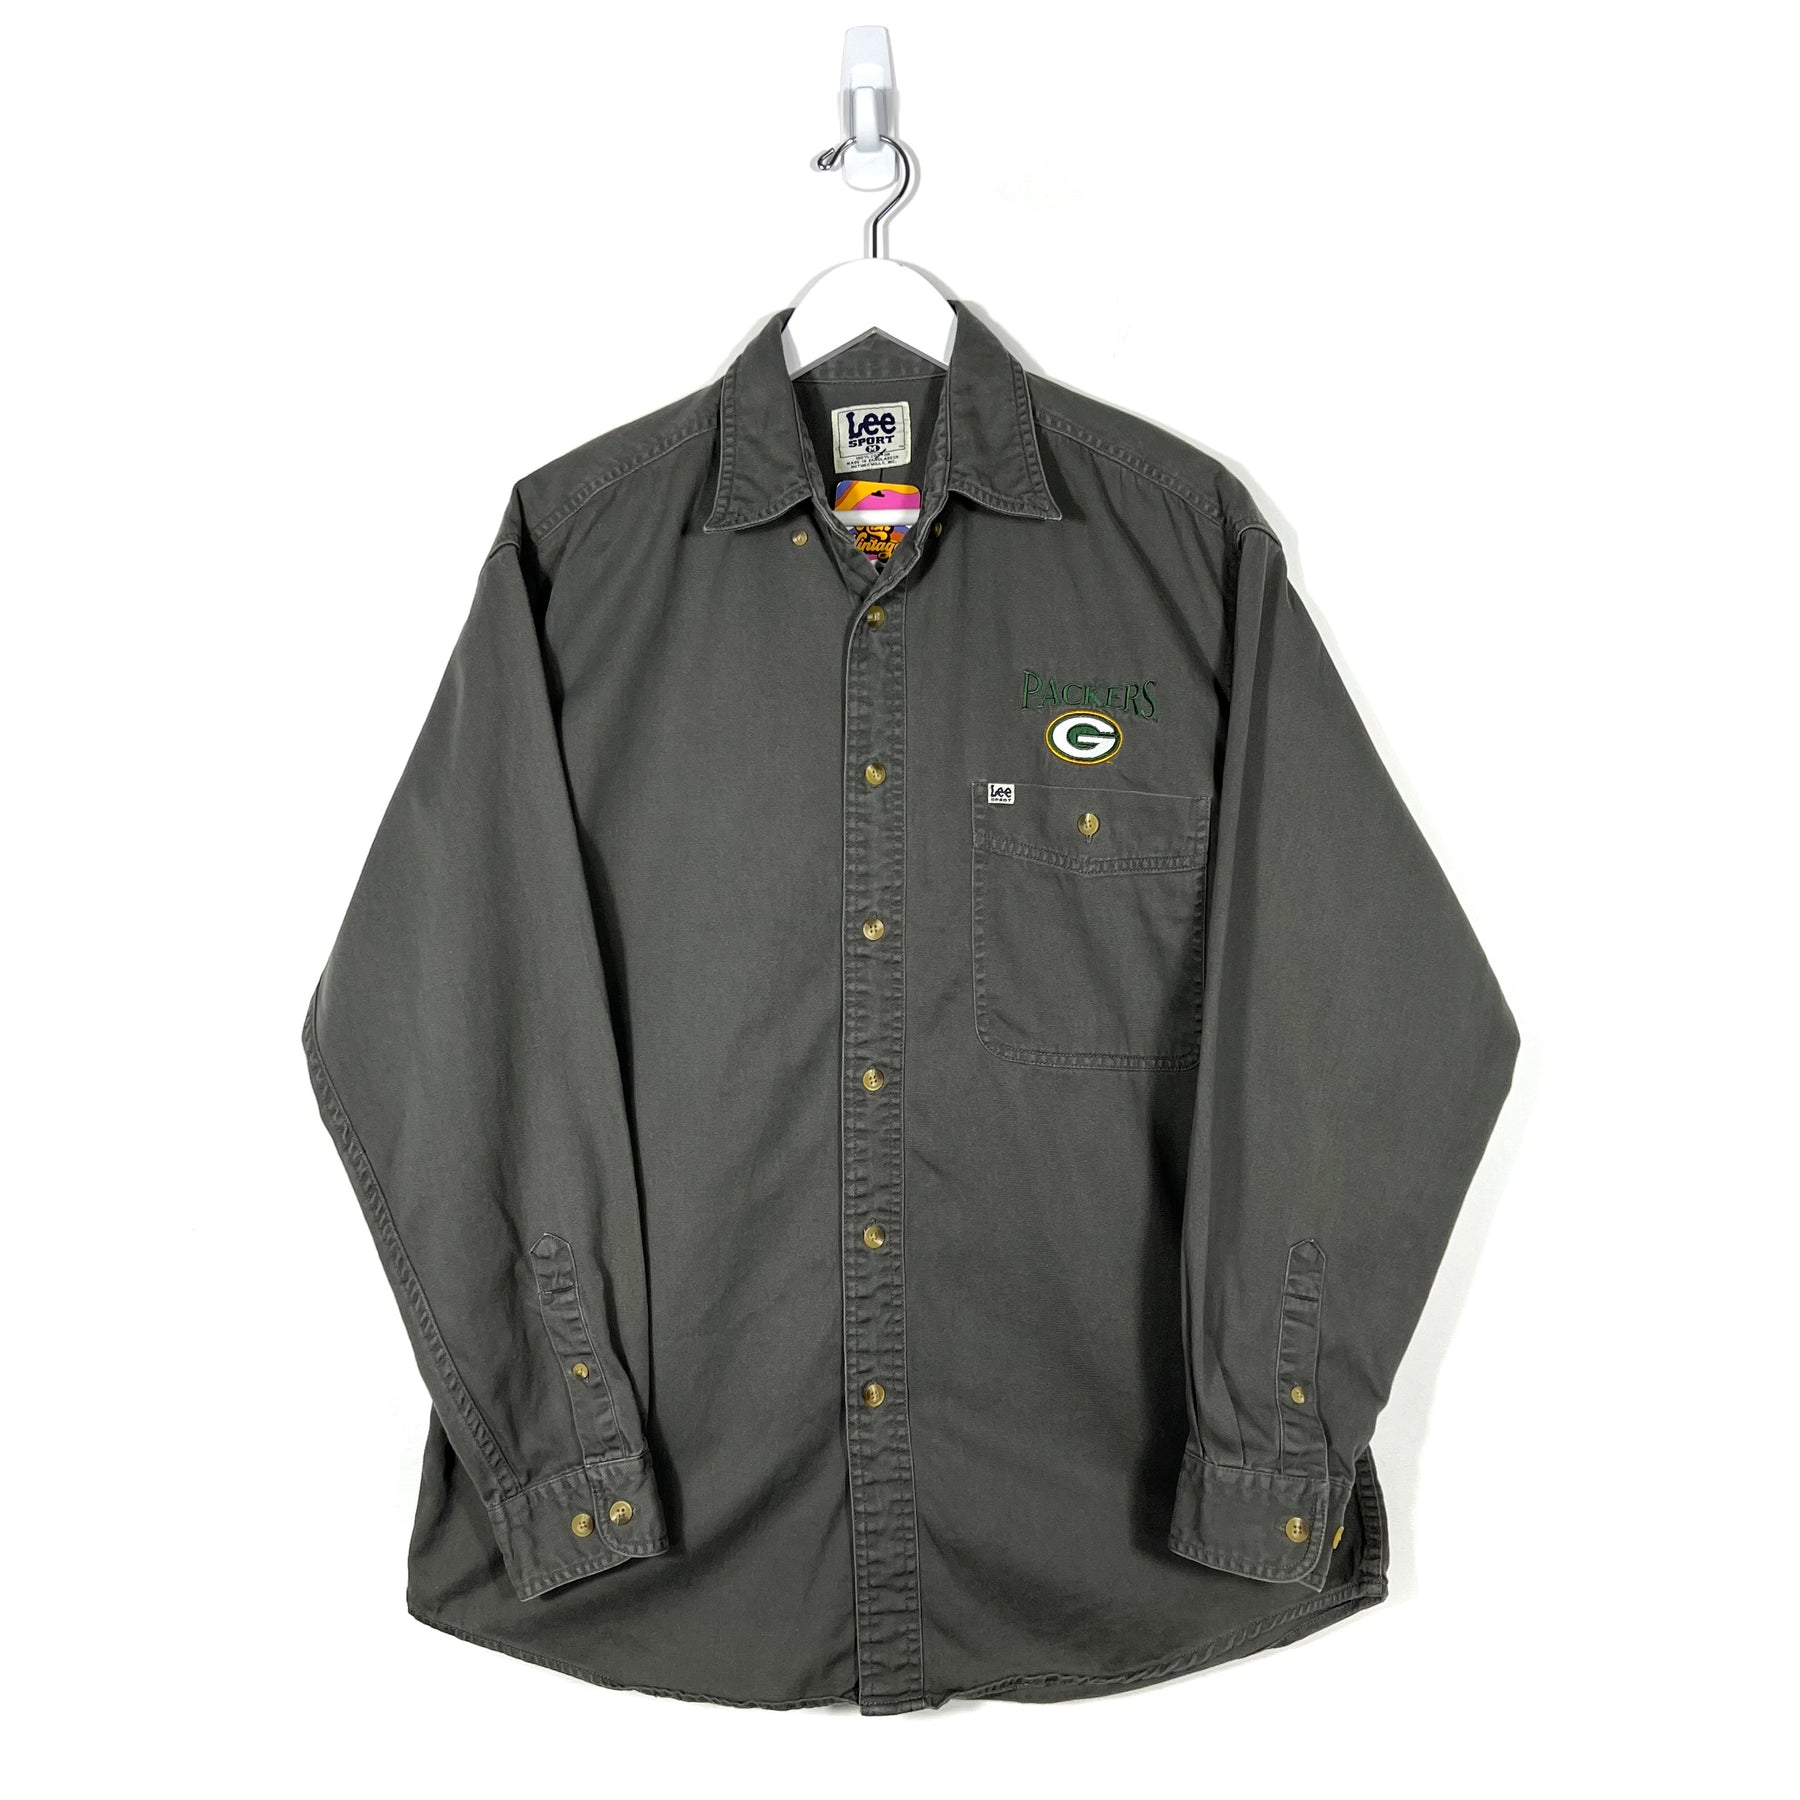 Vintage NFL Green Bay Packers Buttoned Shirt - Men's Medium